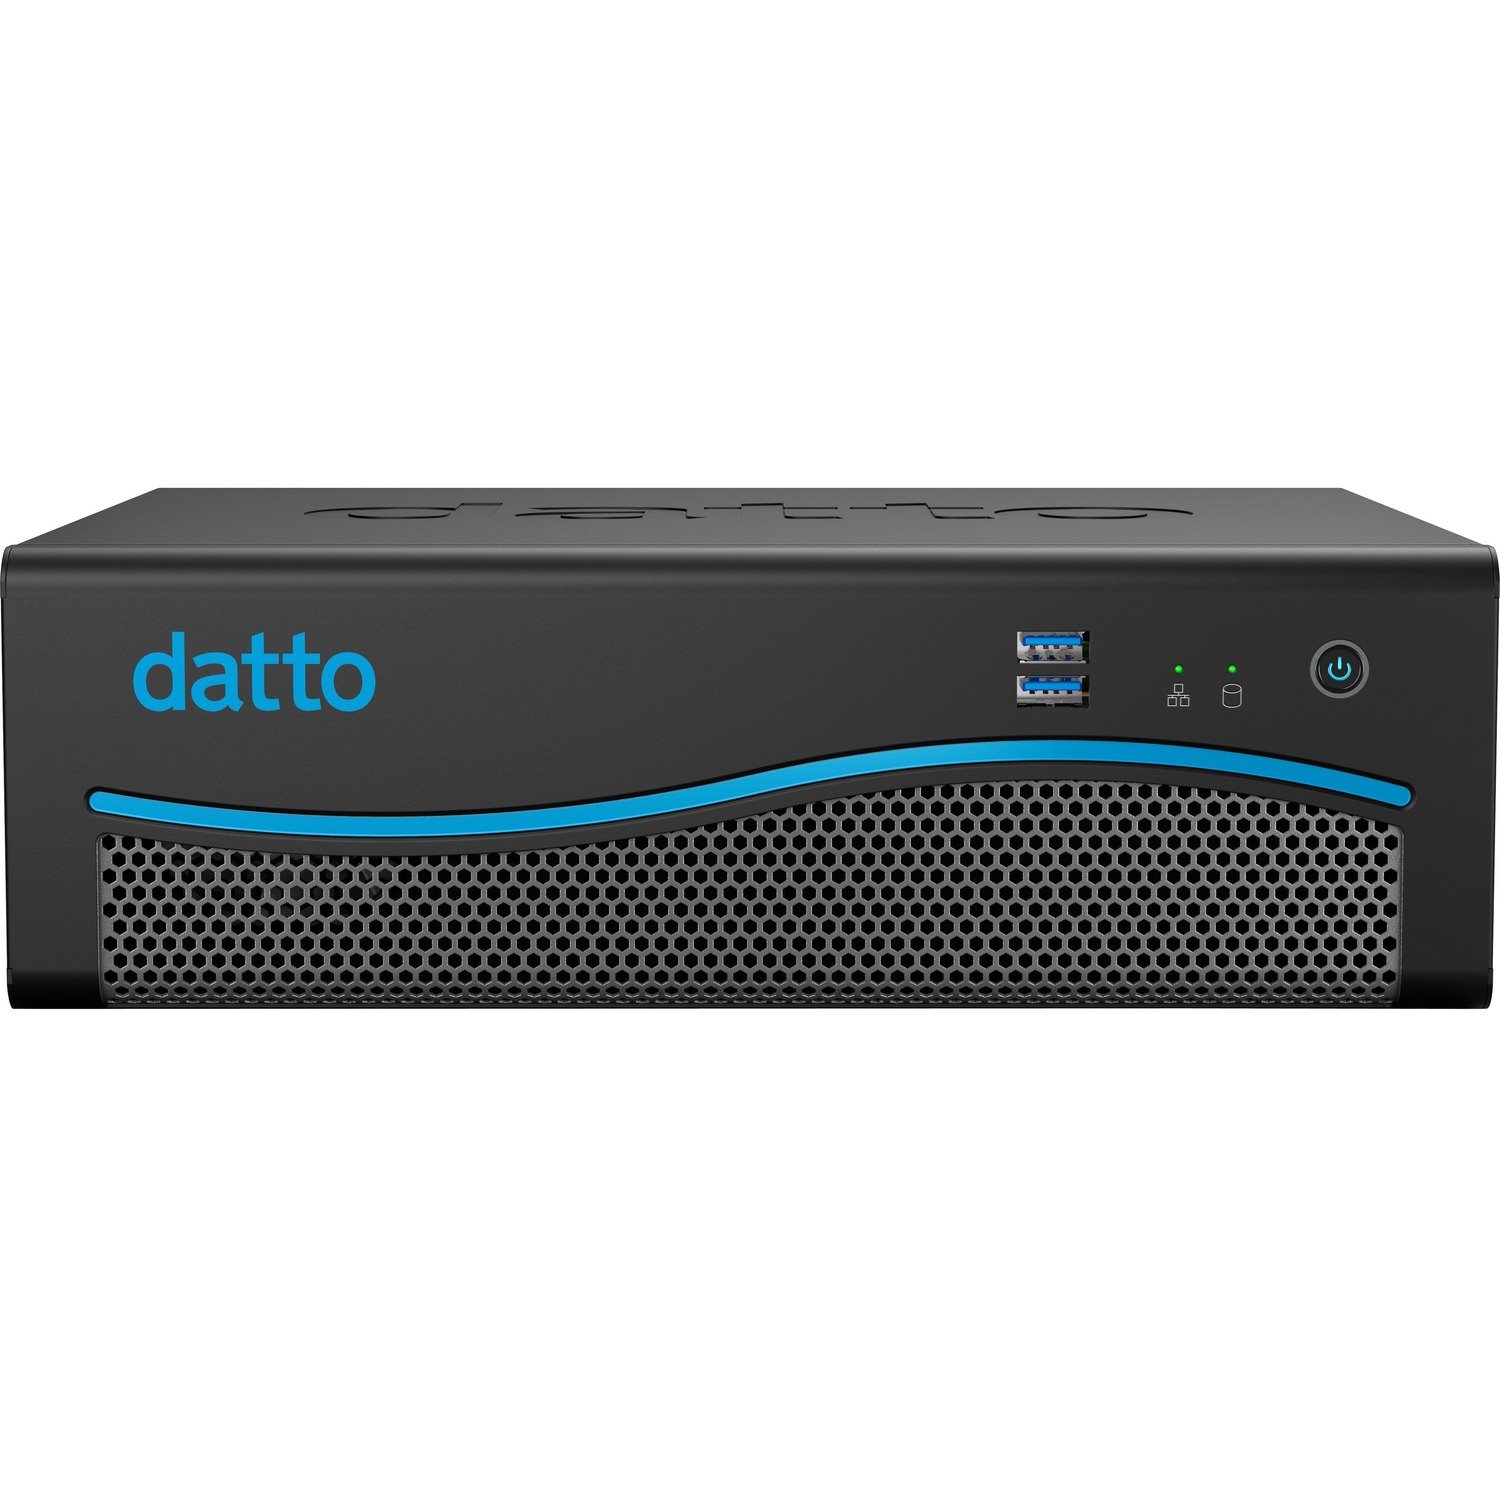 Datto Siris S4-B3 SAN/NAS Storage System - 3 TB Flash Memory Capacity - Intel Xeon D-2123IT - 32 GB RAM Desktop